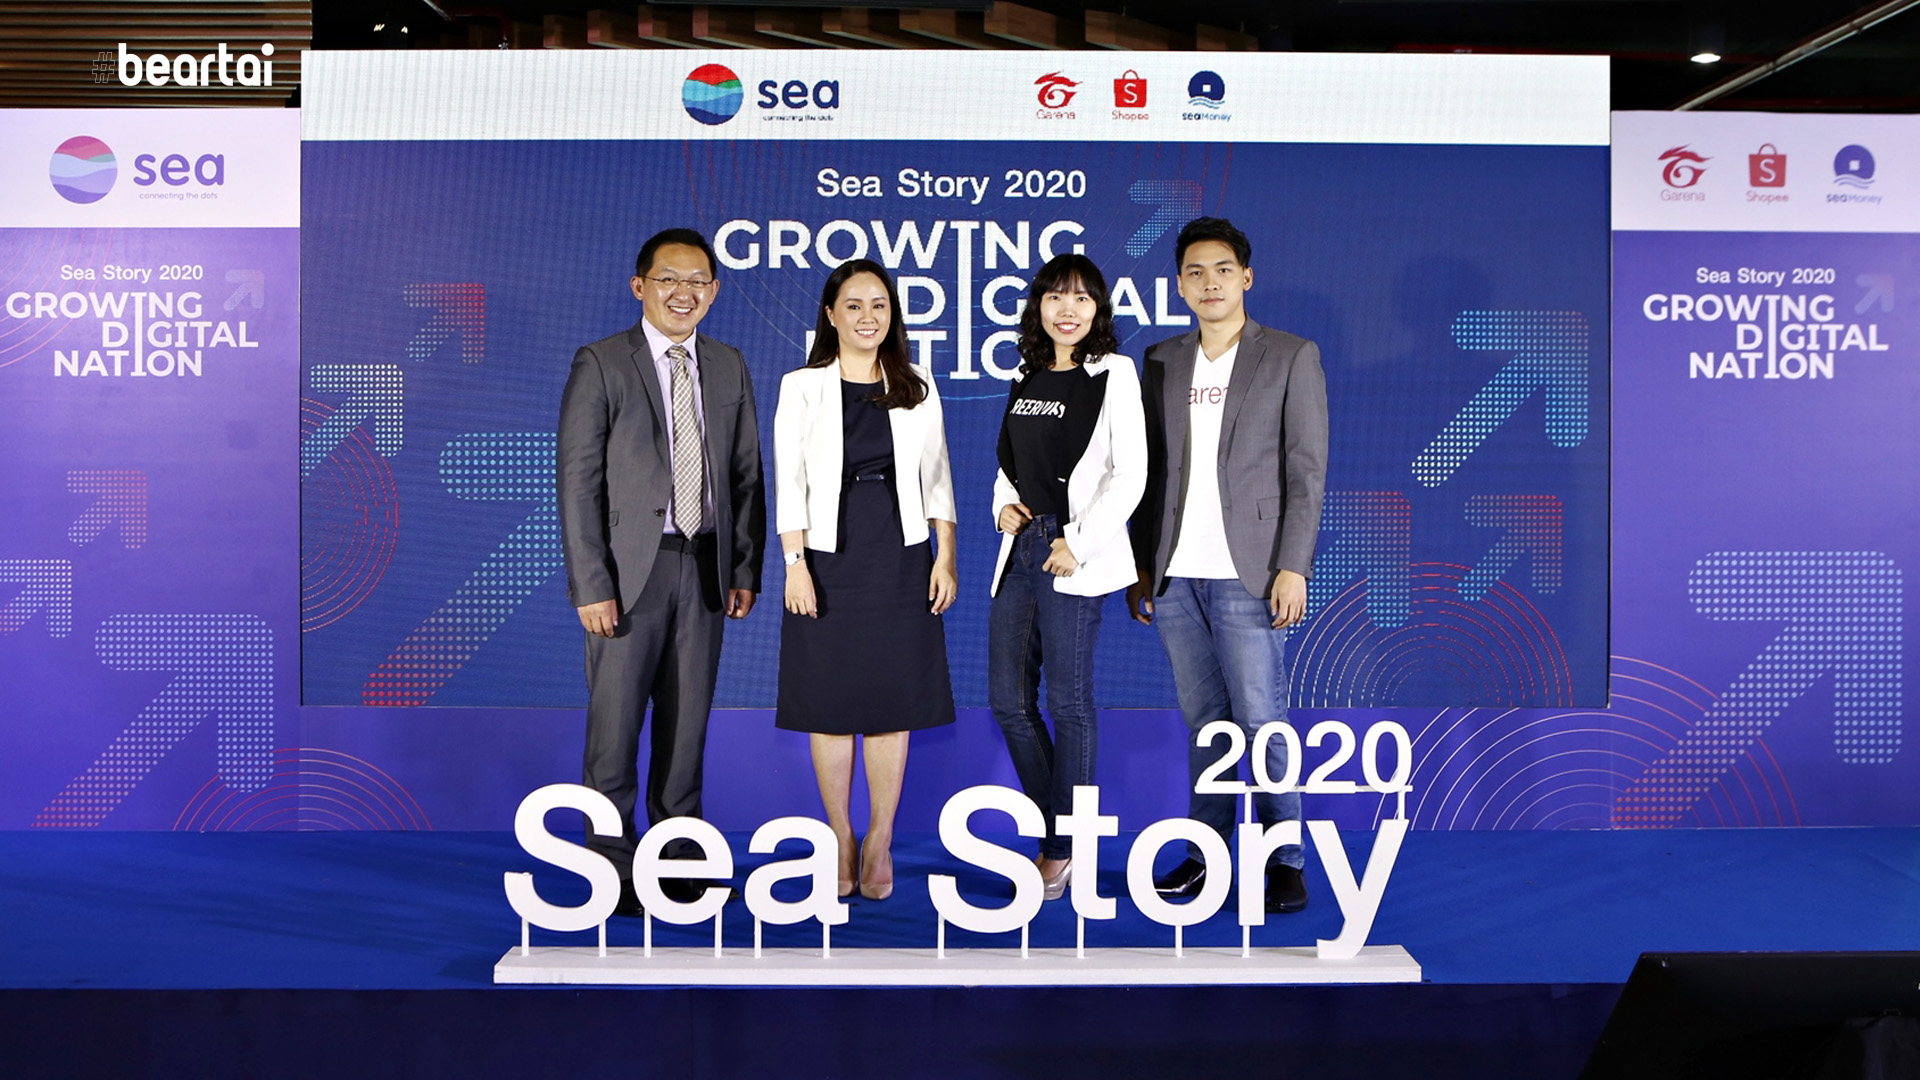 Sea ชูวิสัยทัศน์ขับเคลื่อน ‘Digital Nation’ ยกระดับ ‘เศรษฐกิจ’ และ ‘คน’ ดิจิทัล ในประเทศไทย